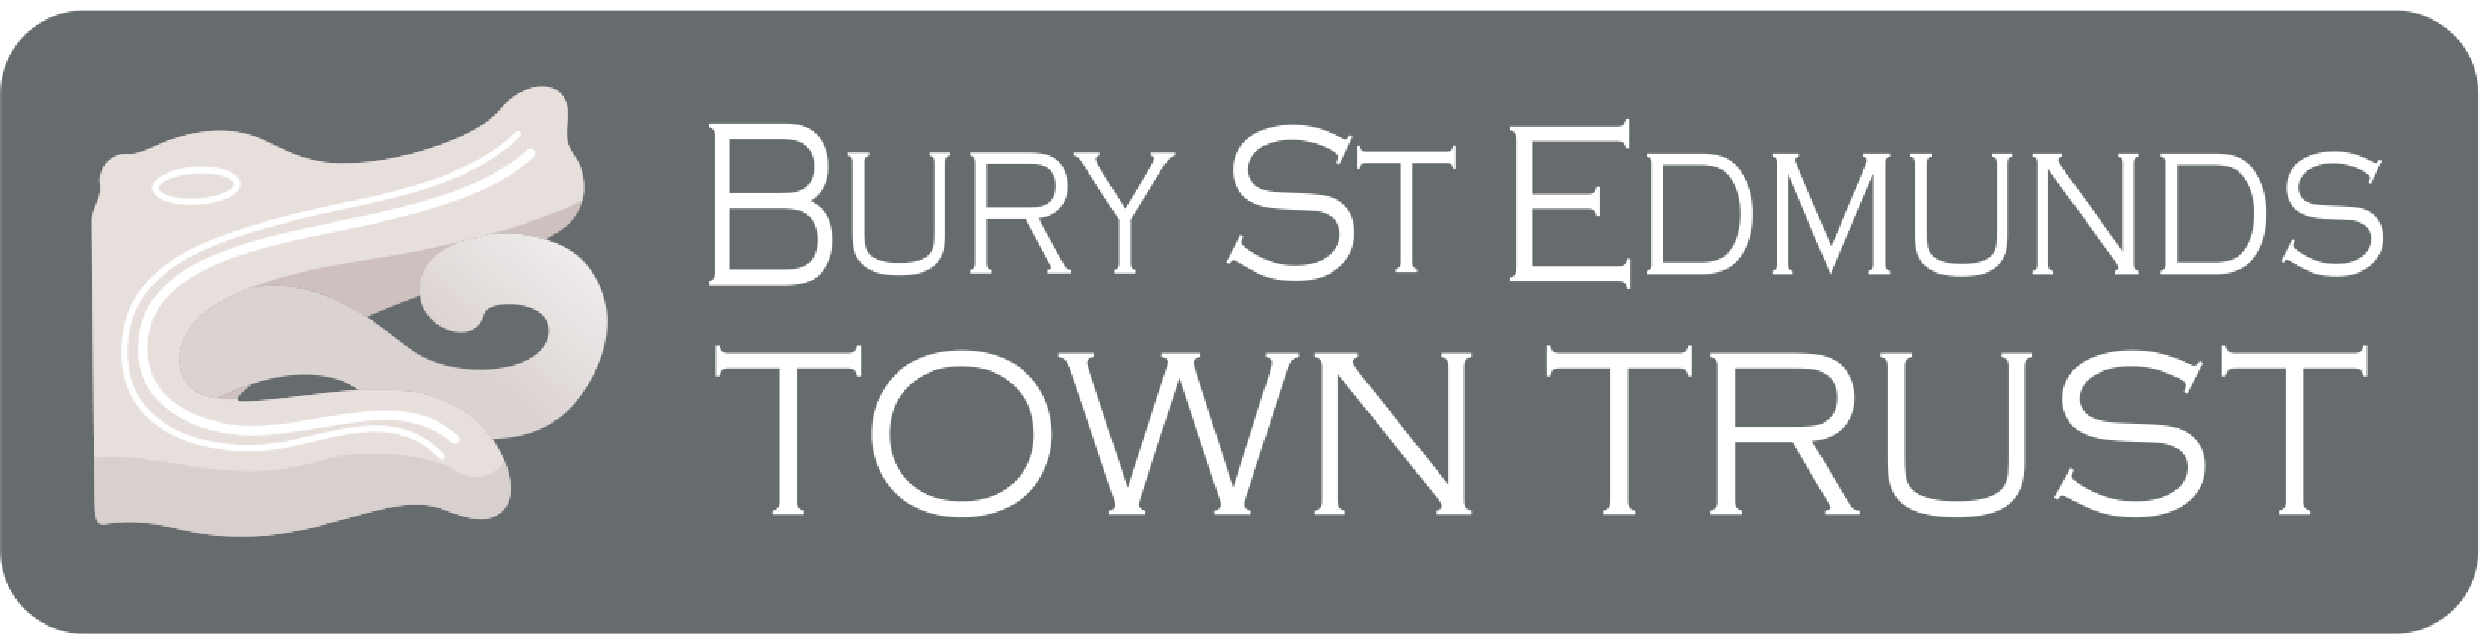 Bury Town Trust logo